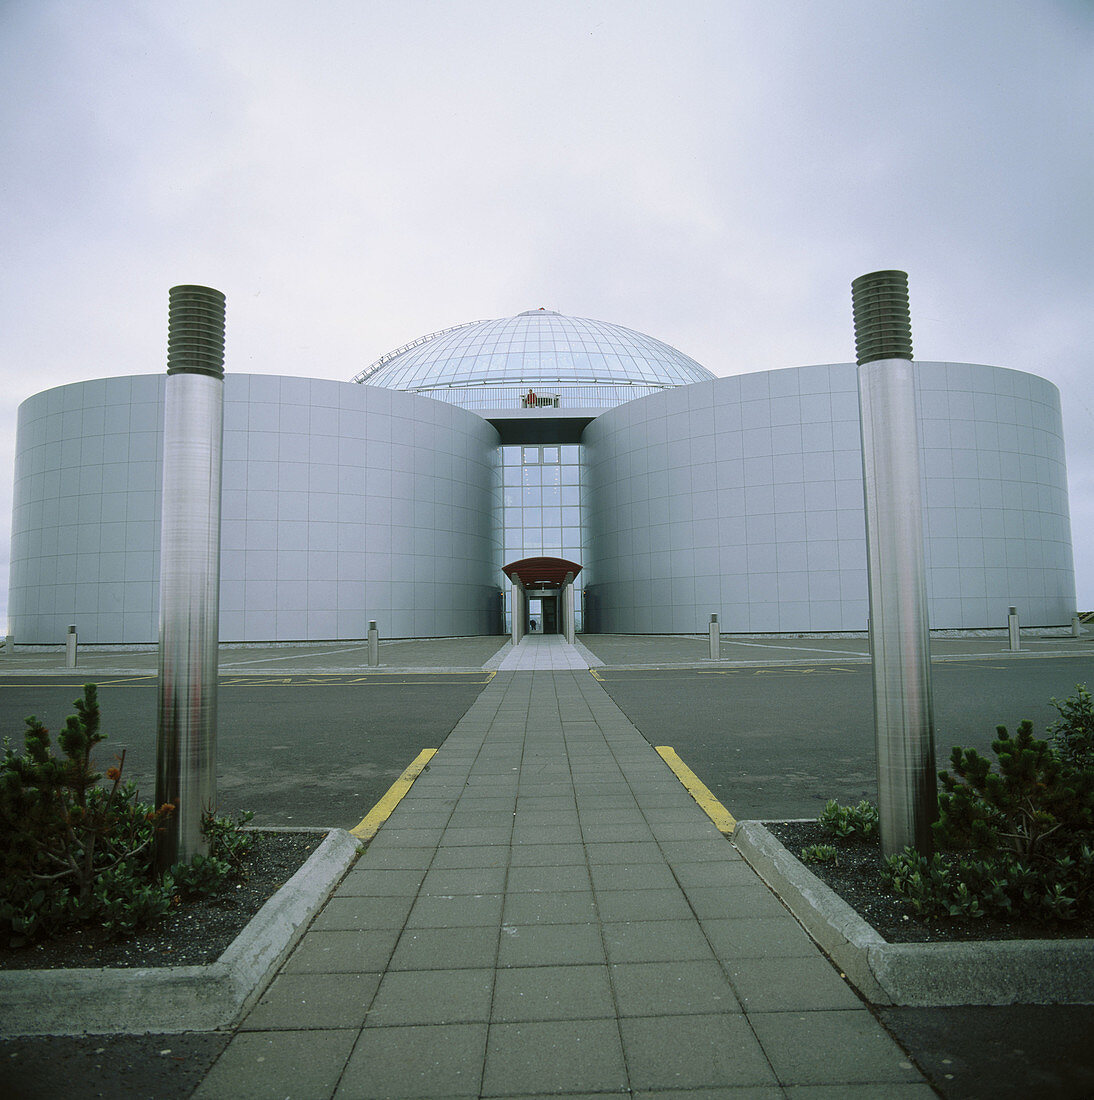 Perlan (The Pearl), hot water storage tanks, rotating restaurant on top. Reykjavik, Iceland